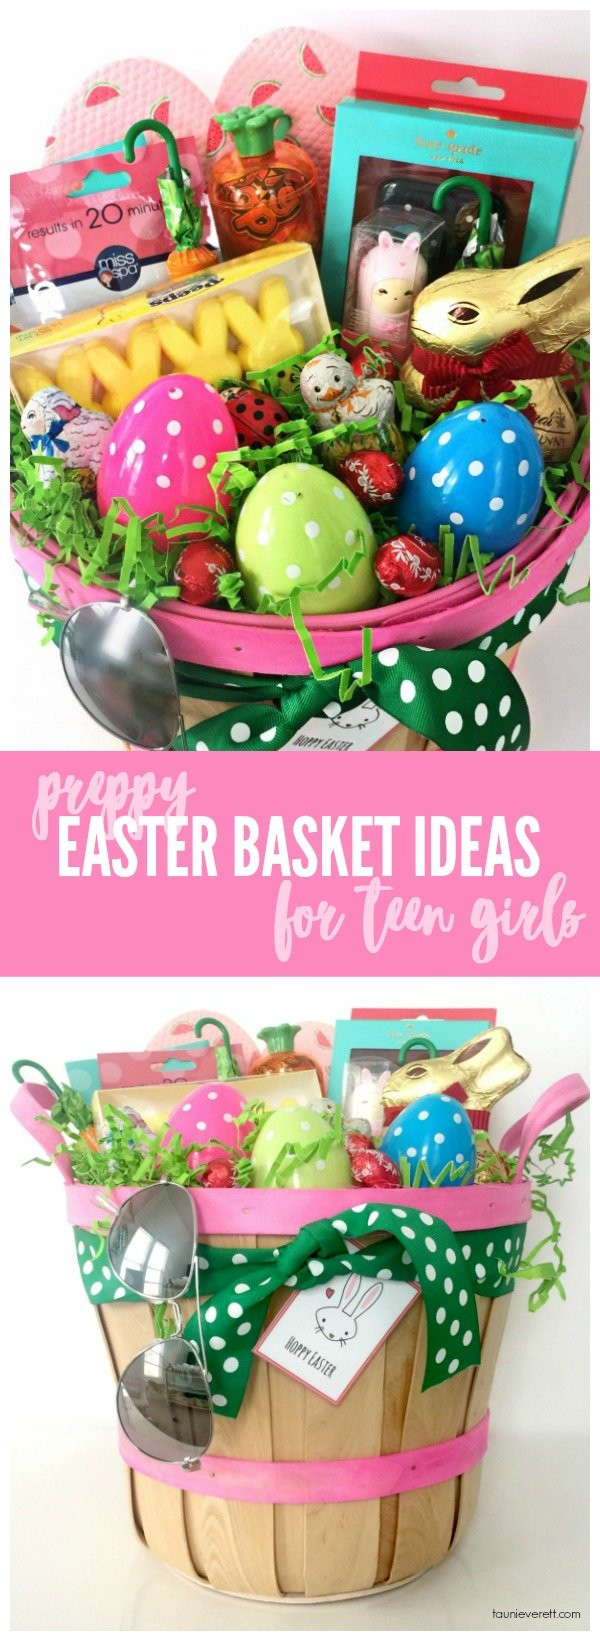 Easter Gifts For Girls
 Preppy Easter Basket Ideas for Teen Girls